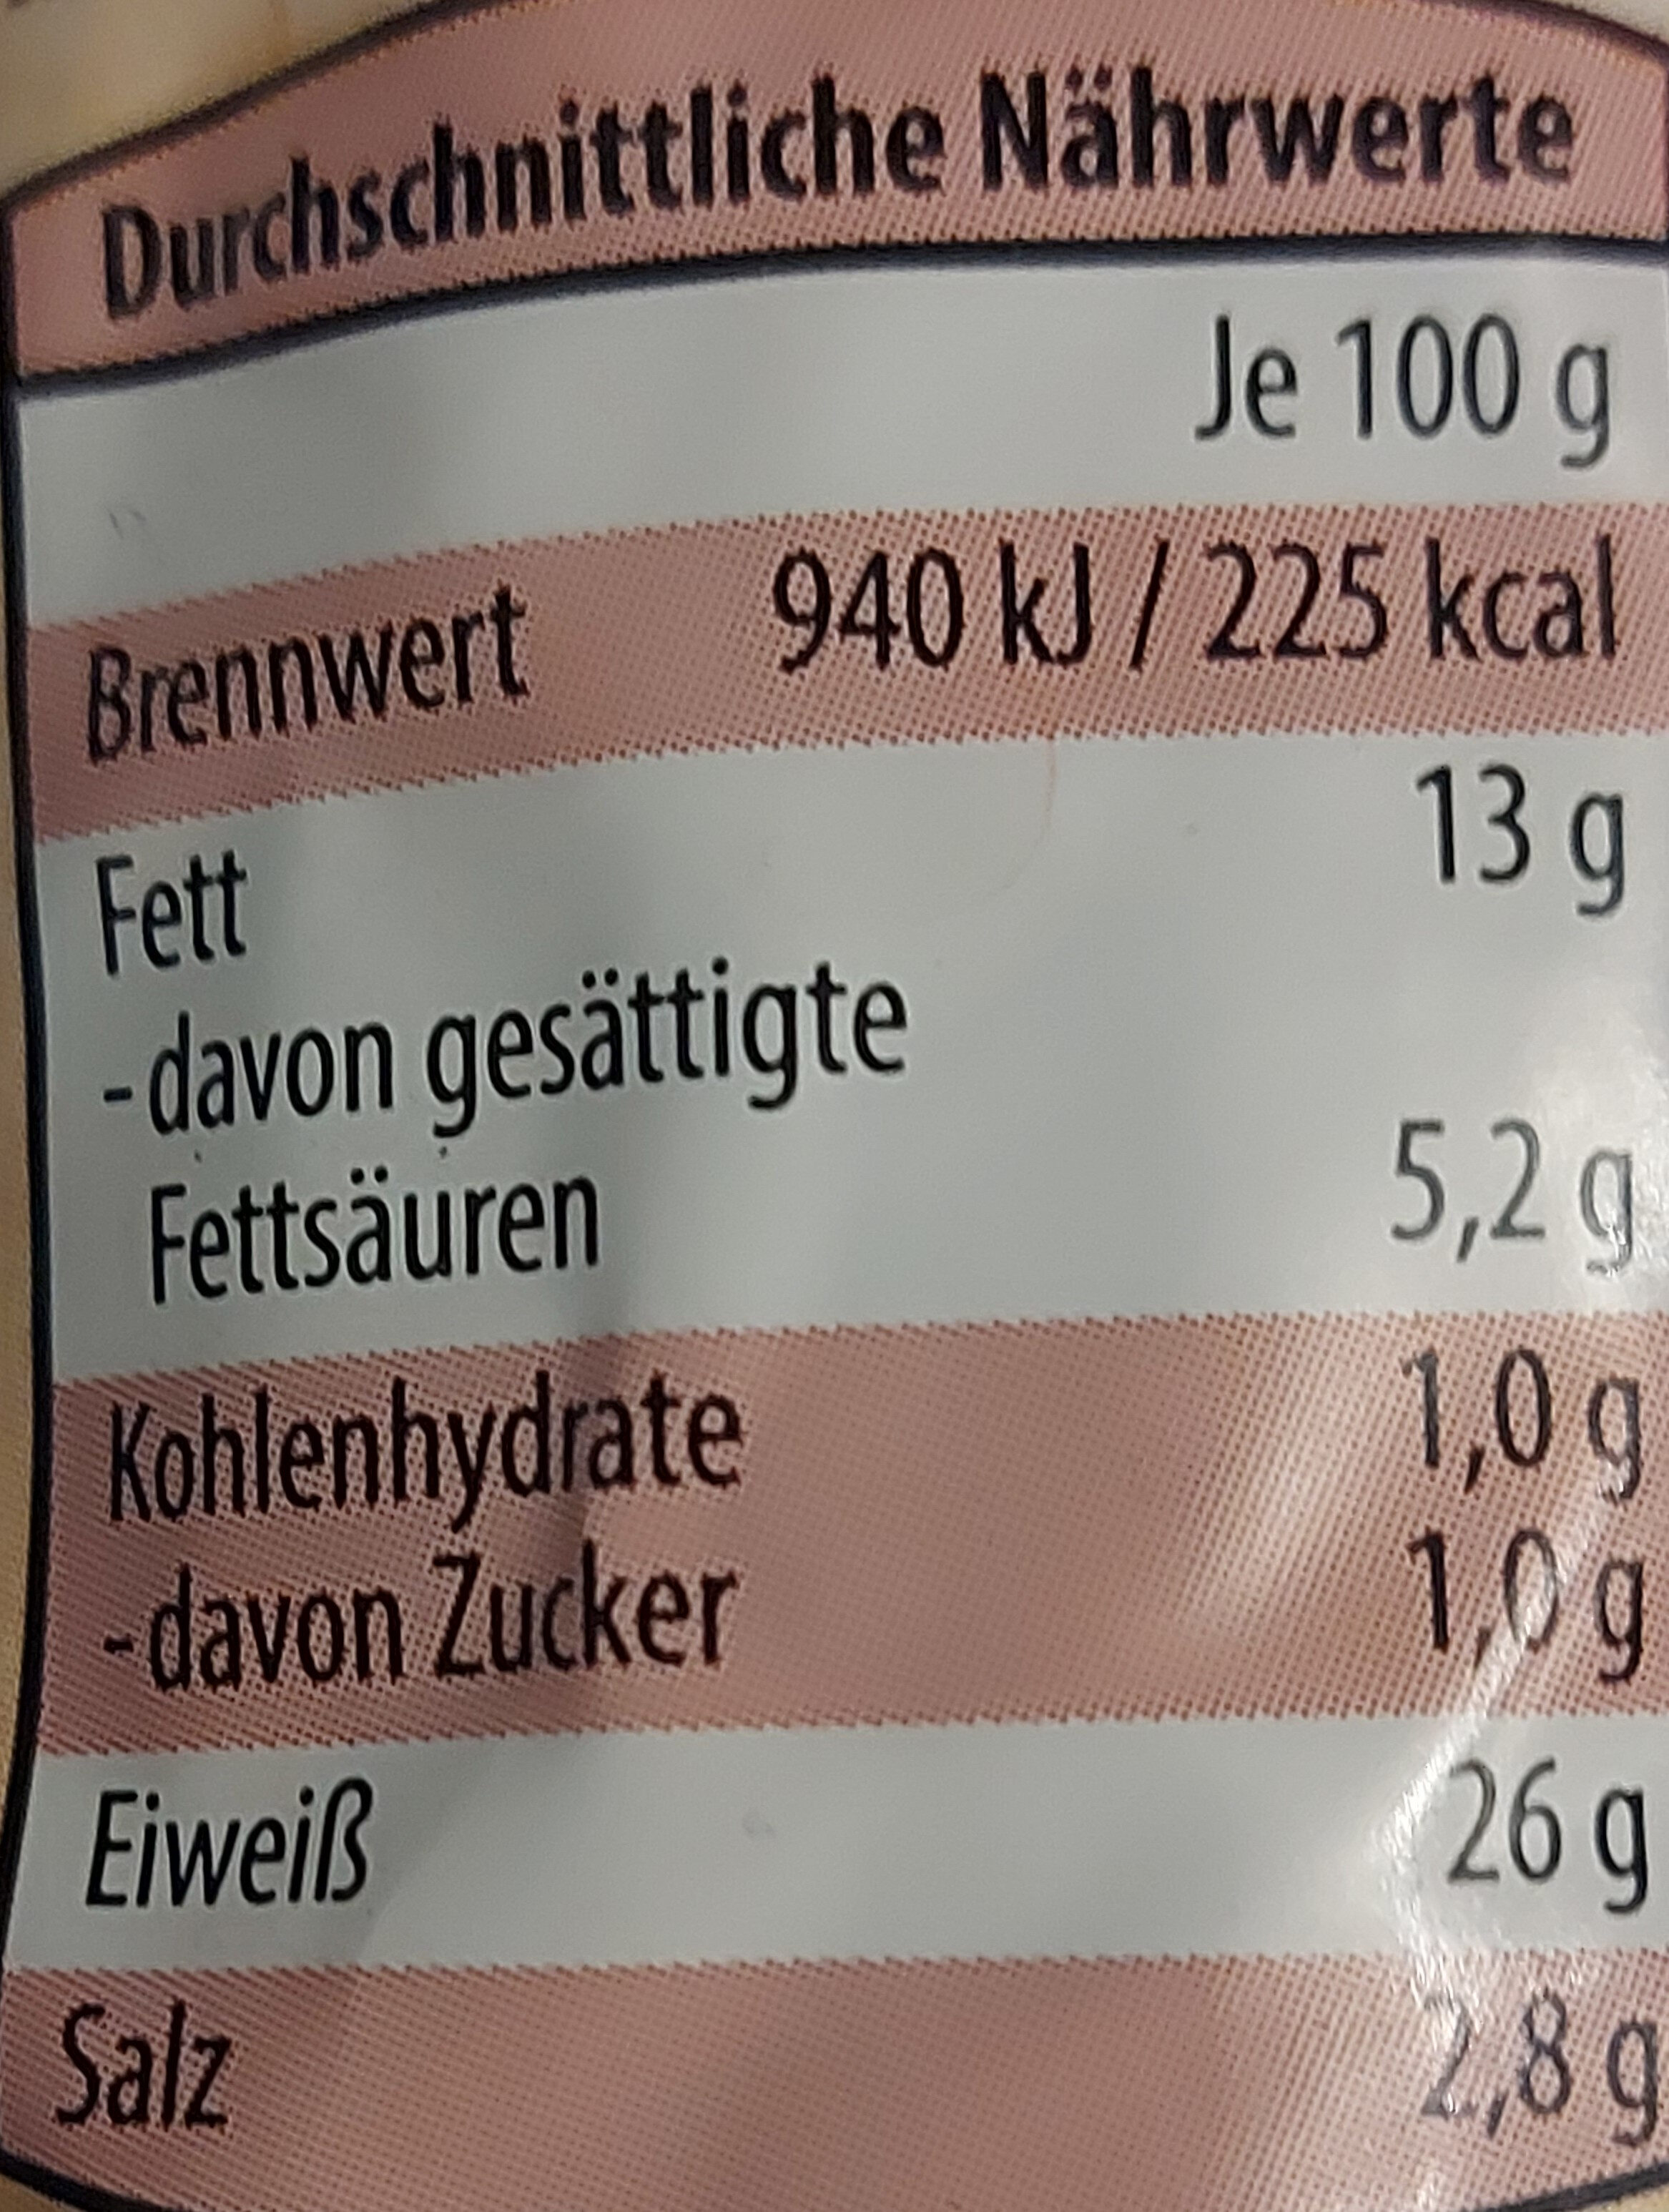 Original Polnische Krakauer Klassik, geräuchert - Nutrition facts - de